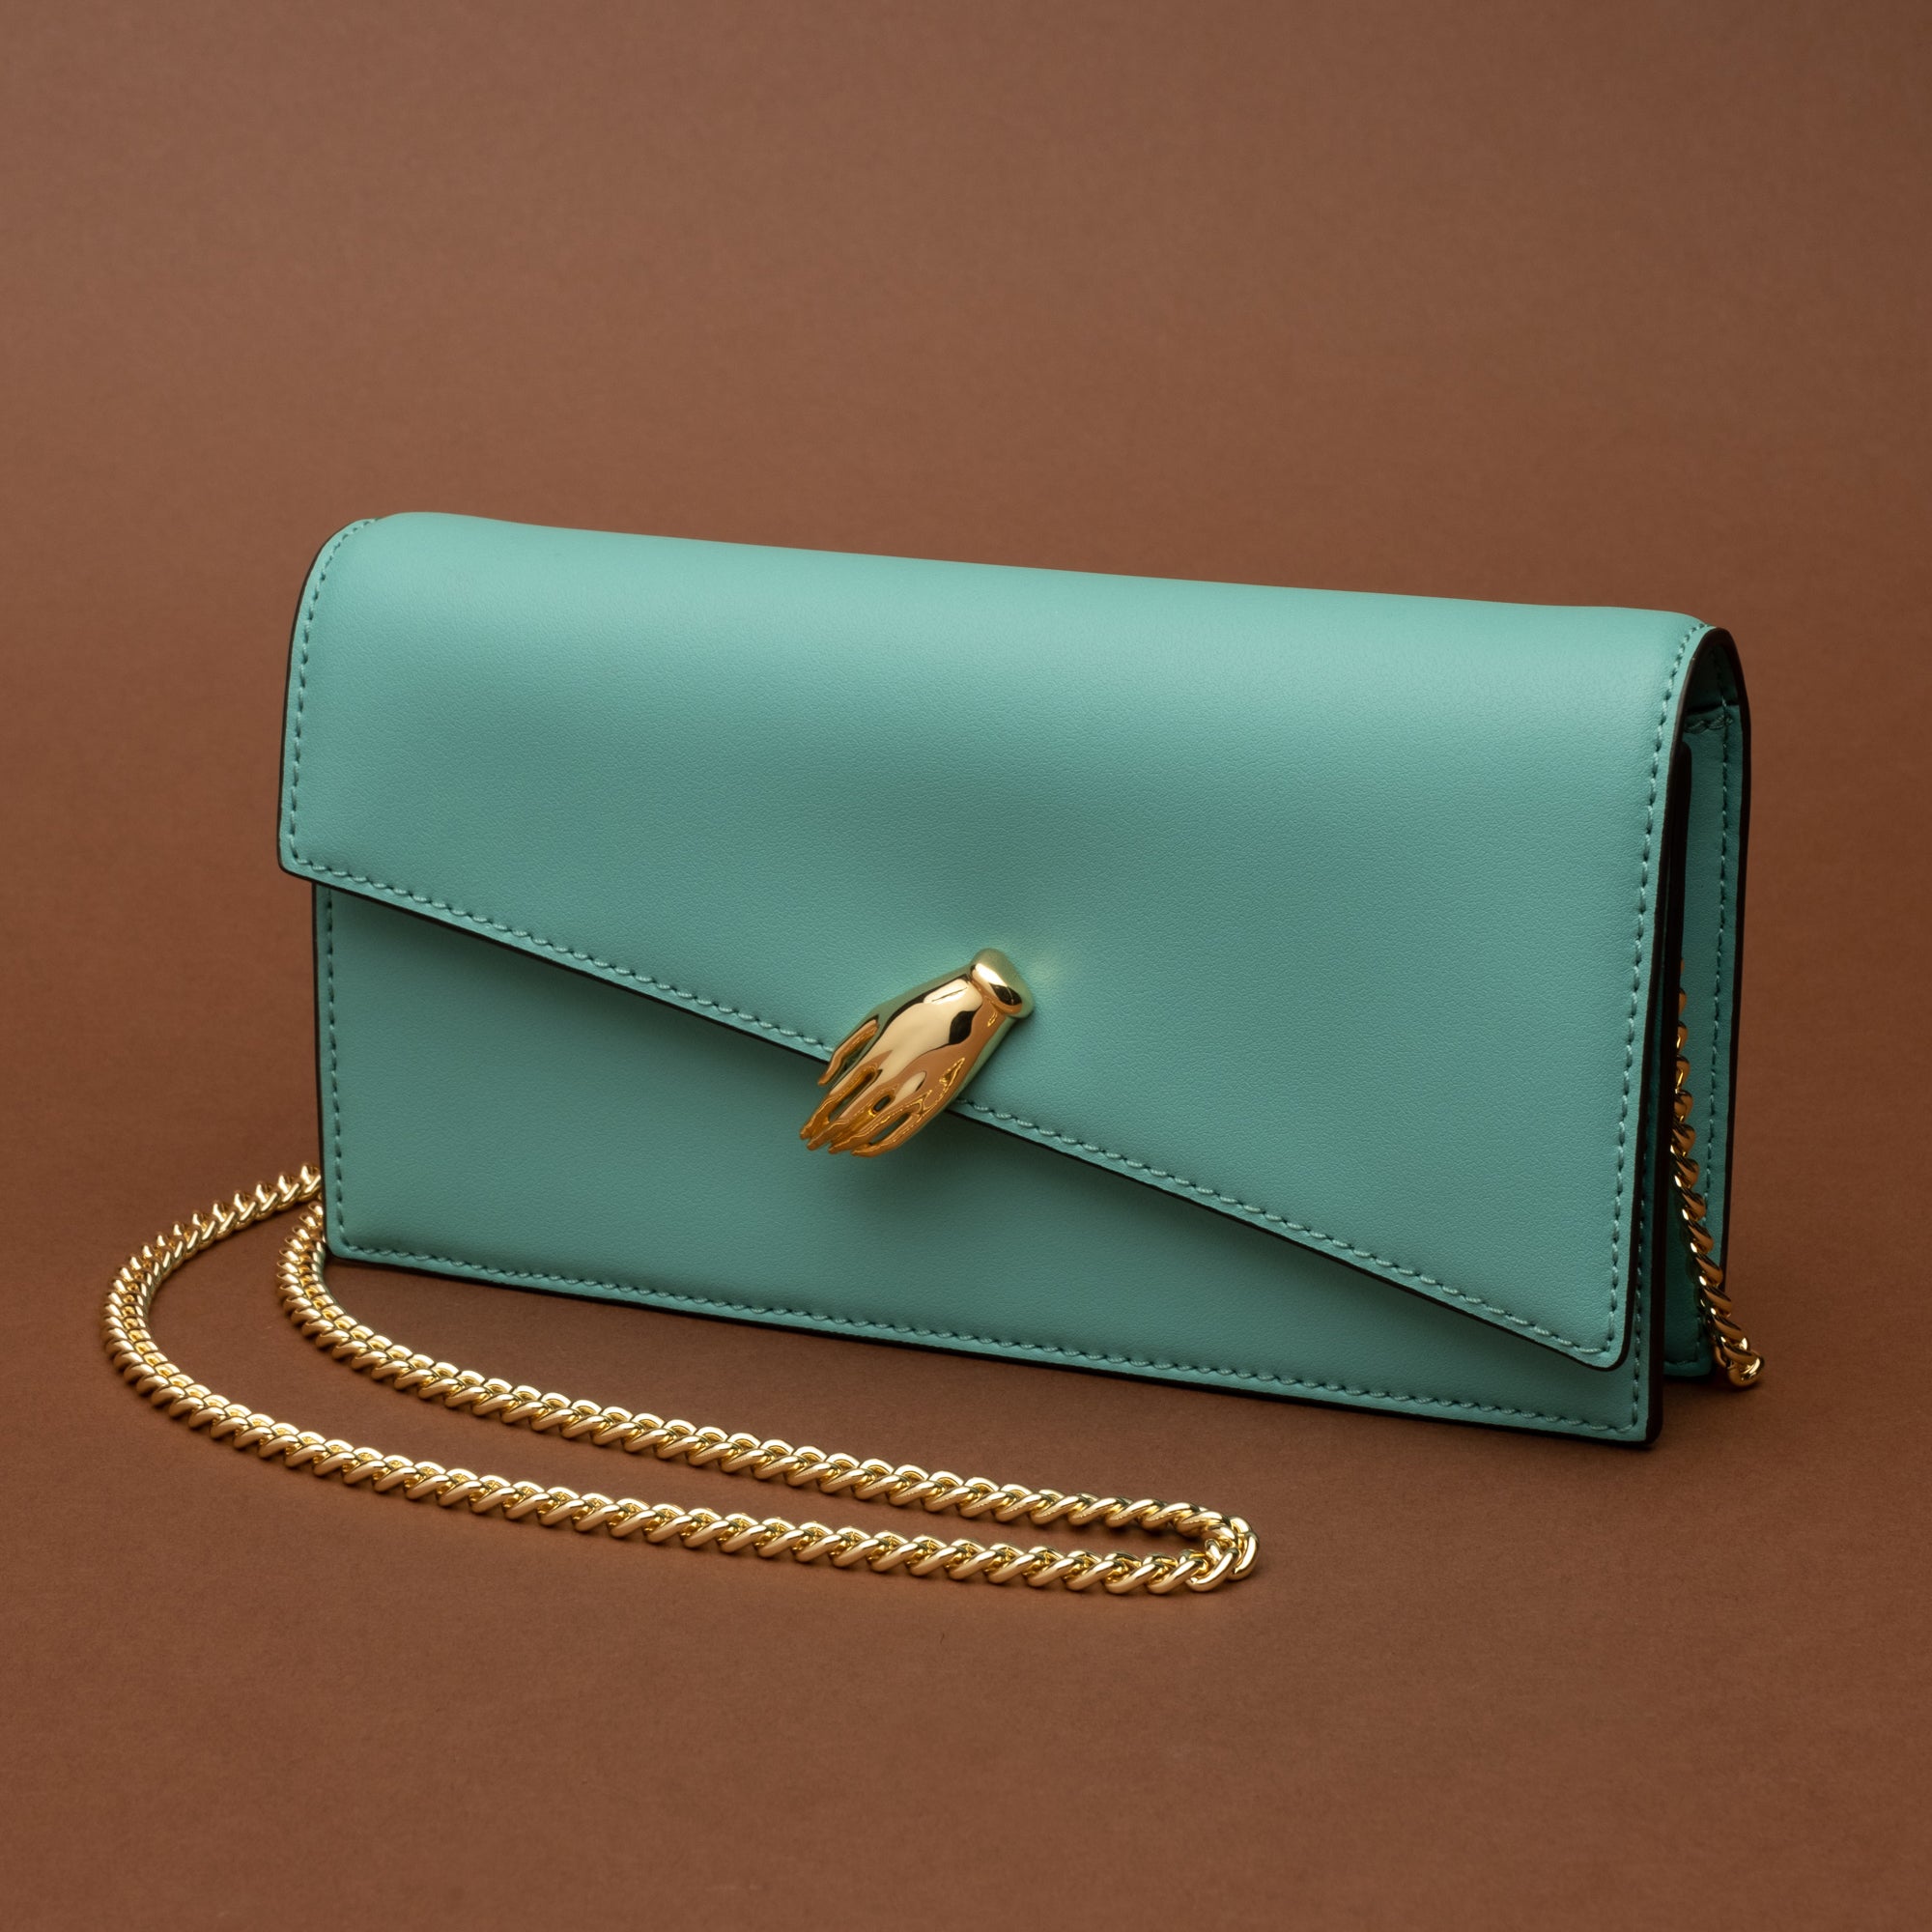 Design Files: Handbags